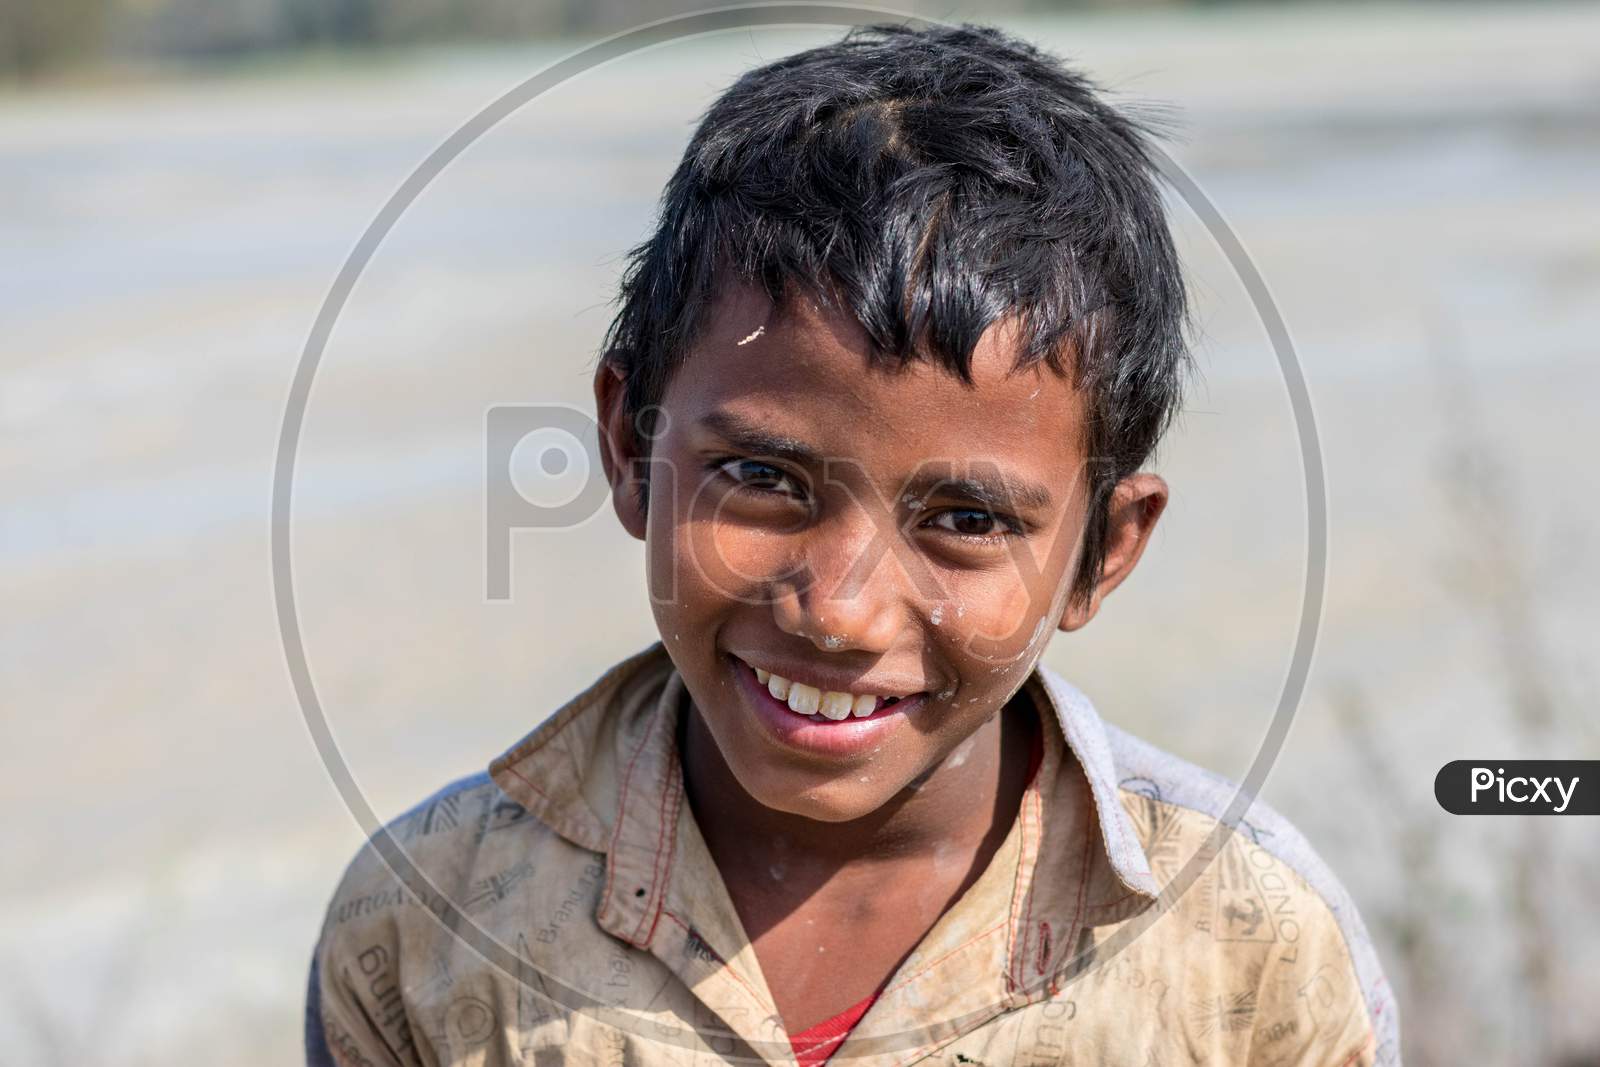 Smile face of villager child